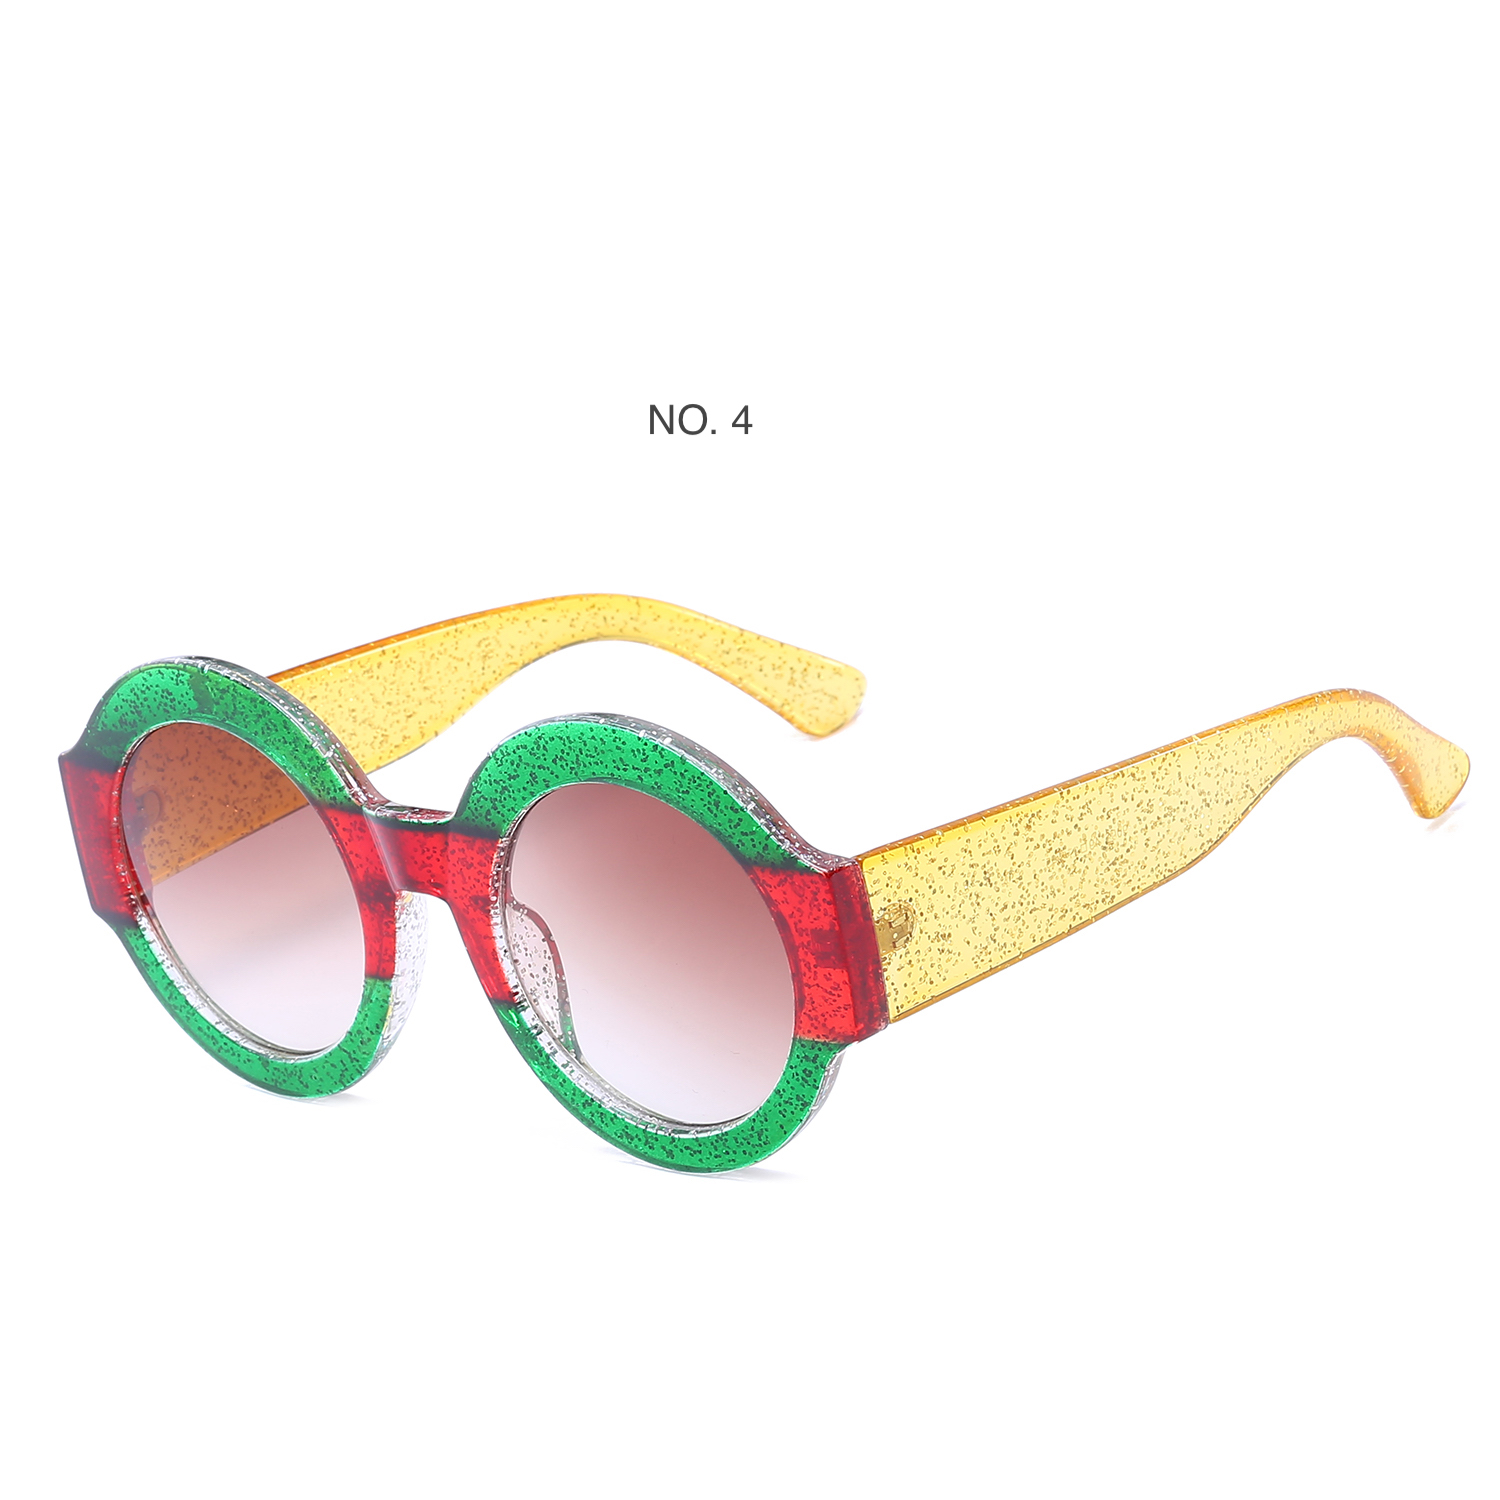 Sunglasses Manufacturer, Trendy Sunglasses, Eyewear Sunglasses